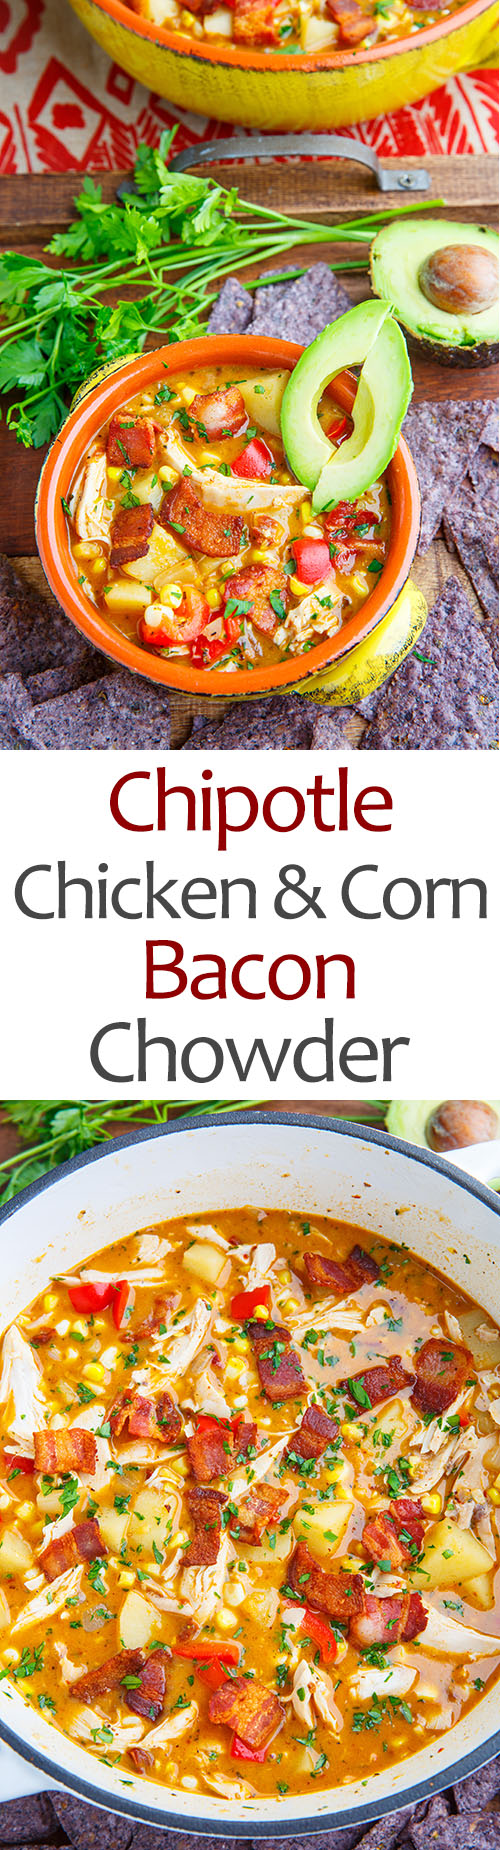 Chipotle Chicken and Corn Bacon Chowder